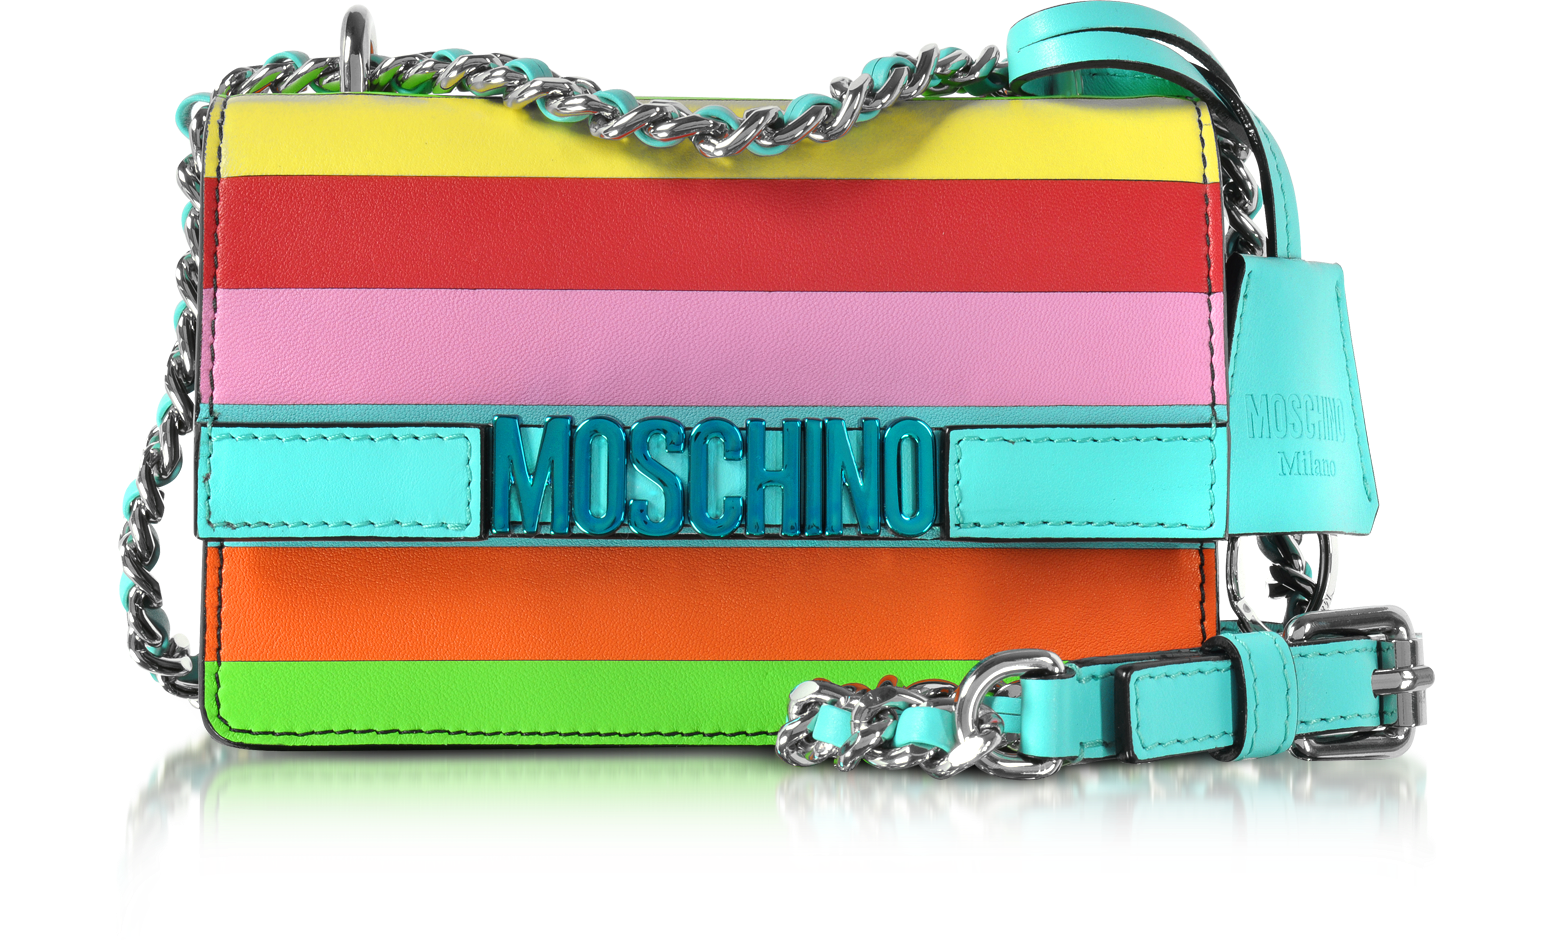 moschino rainbow bag